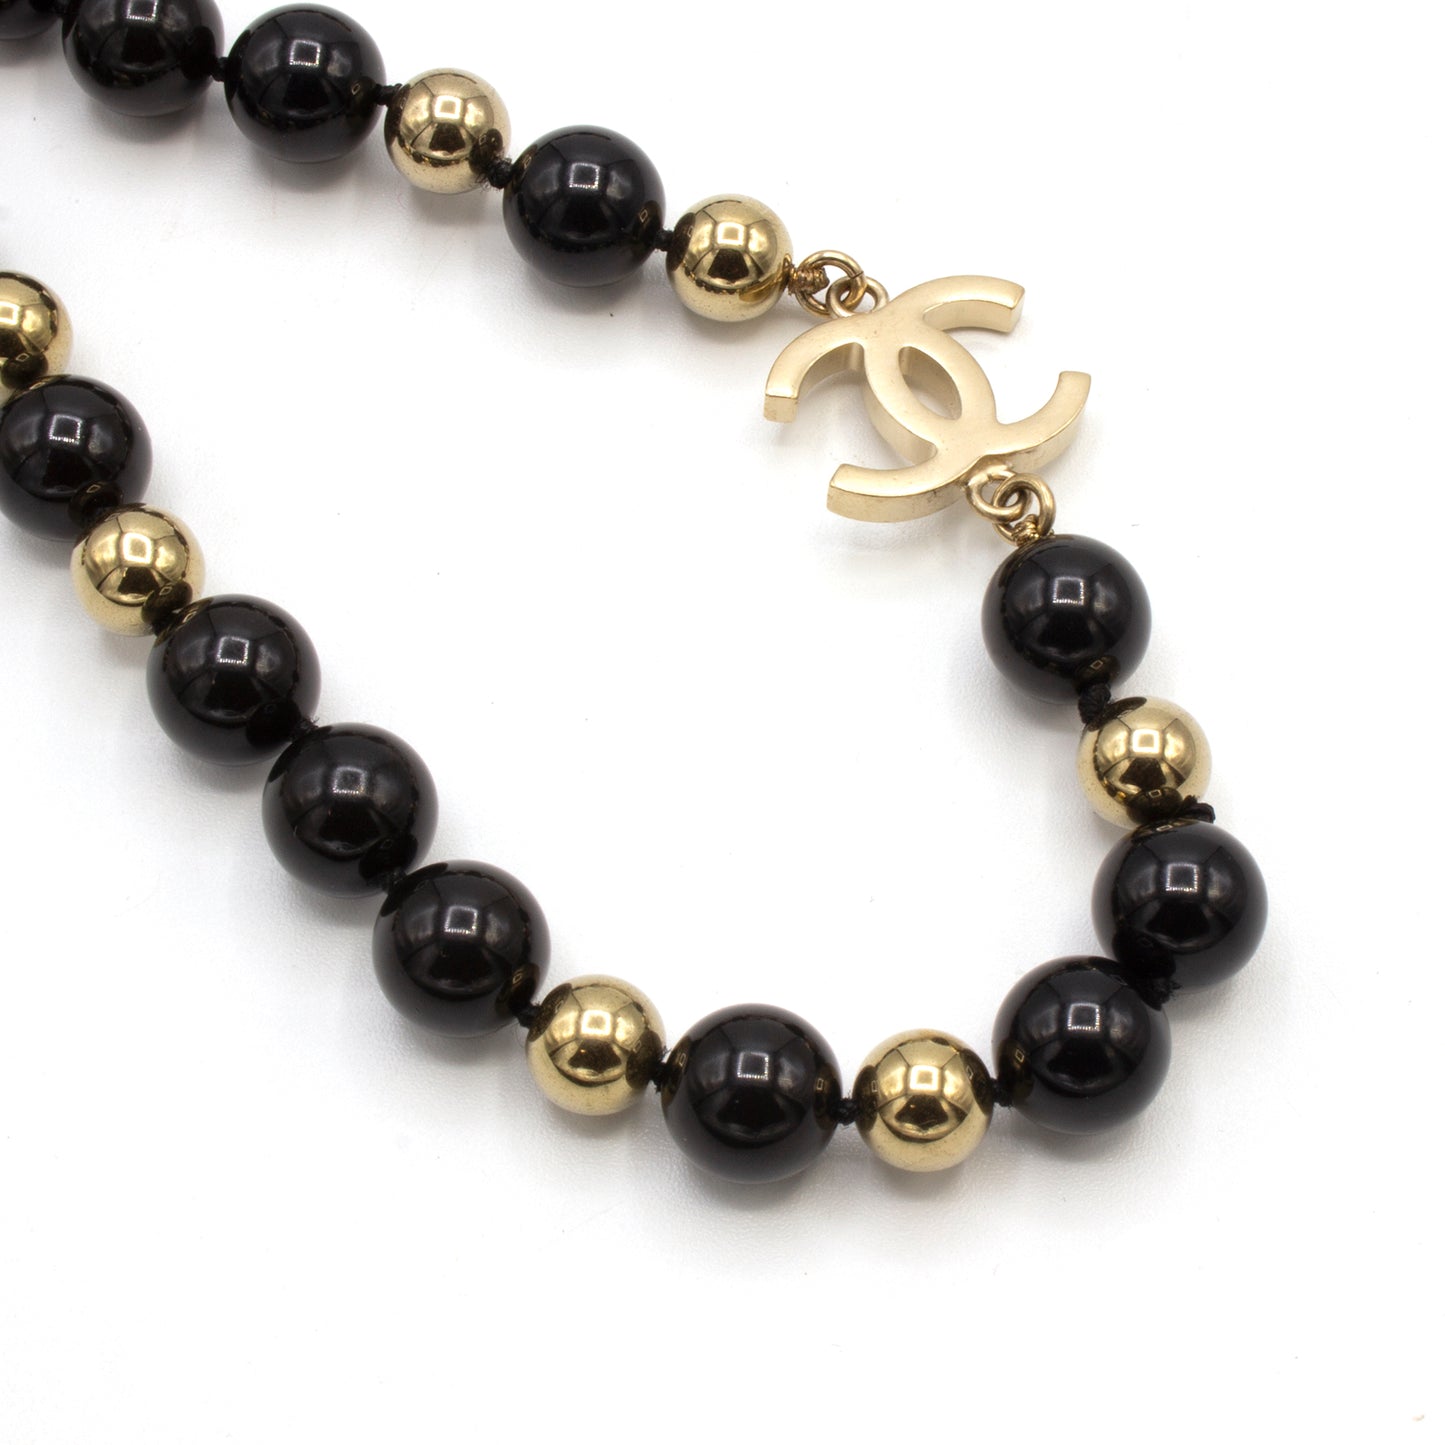 Chanel Coco CC pearl necklace